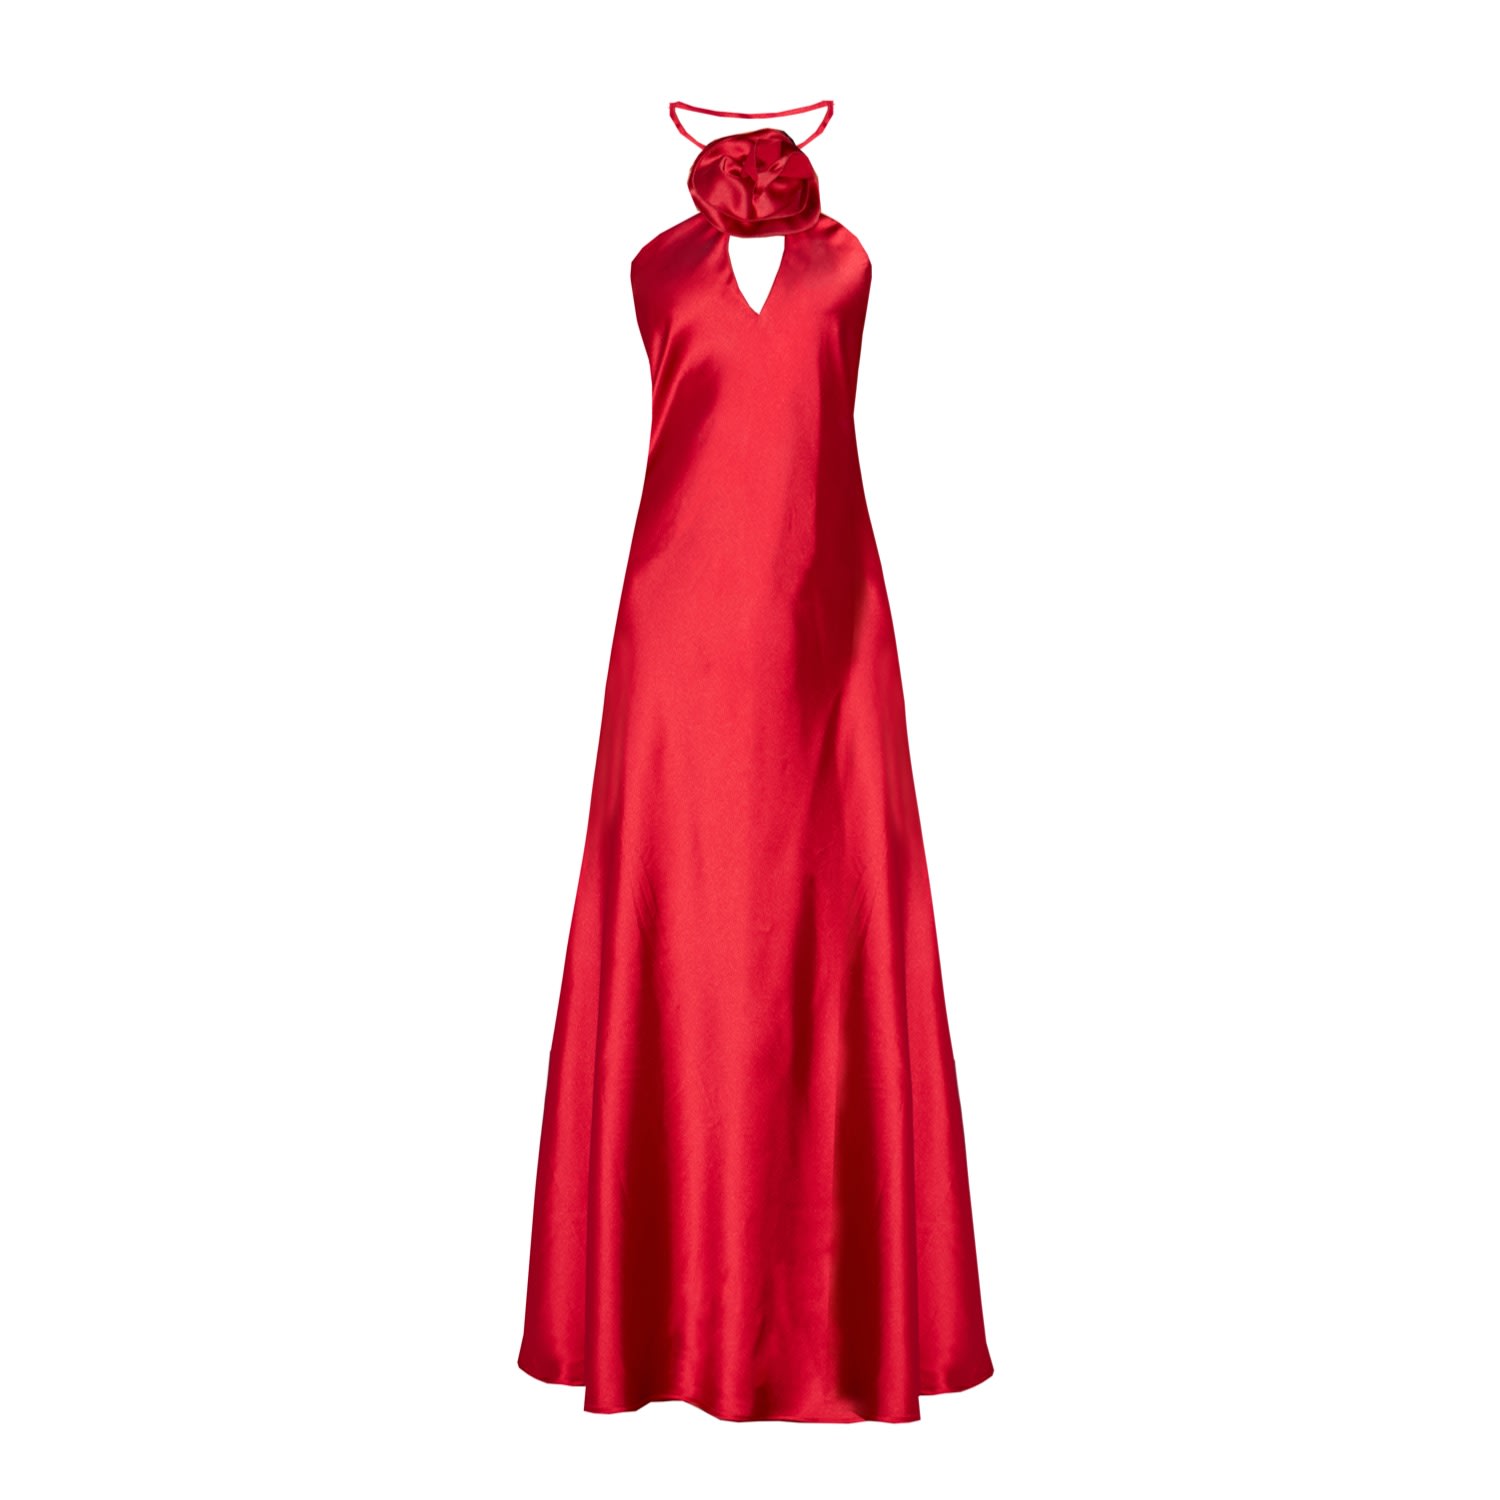 Women’s Bianca Red Dress Medium Delfi Collective